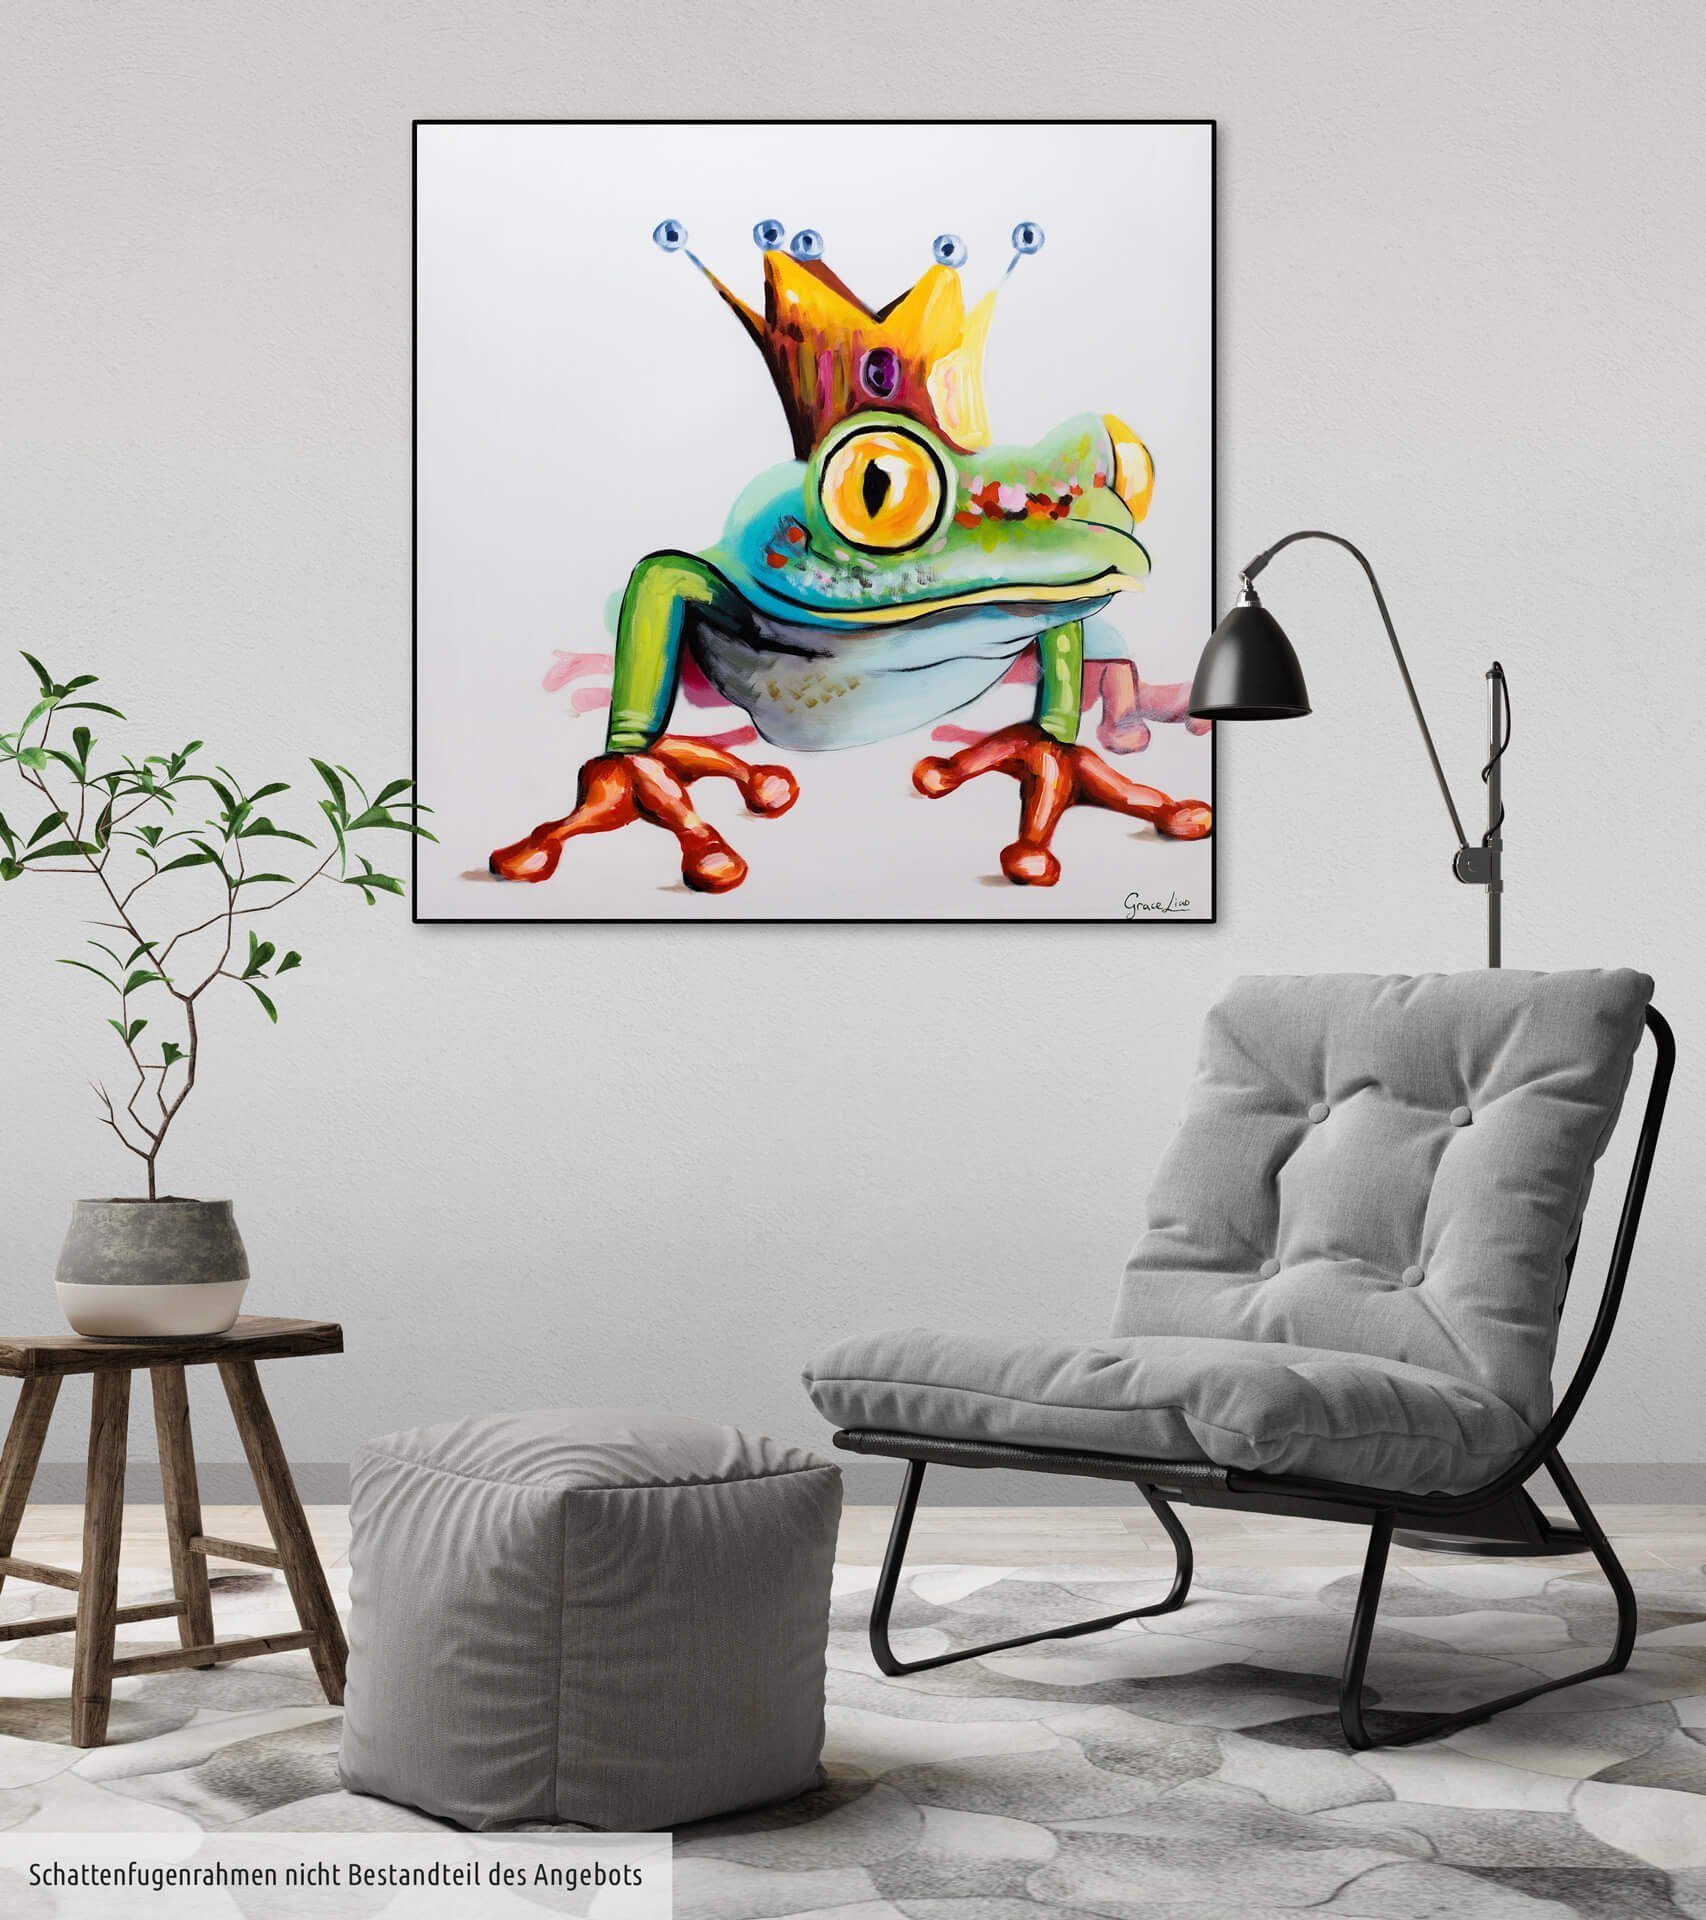 KUNSTLOFT cm, Leinwandbild Gemälde 100% Wandbild Wohnzimmer Froschkönig 80x80 HANDGEMALT